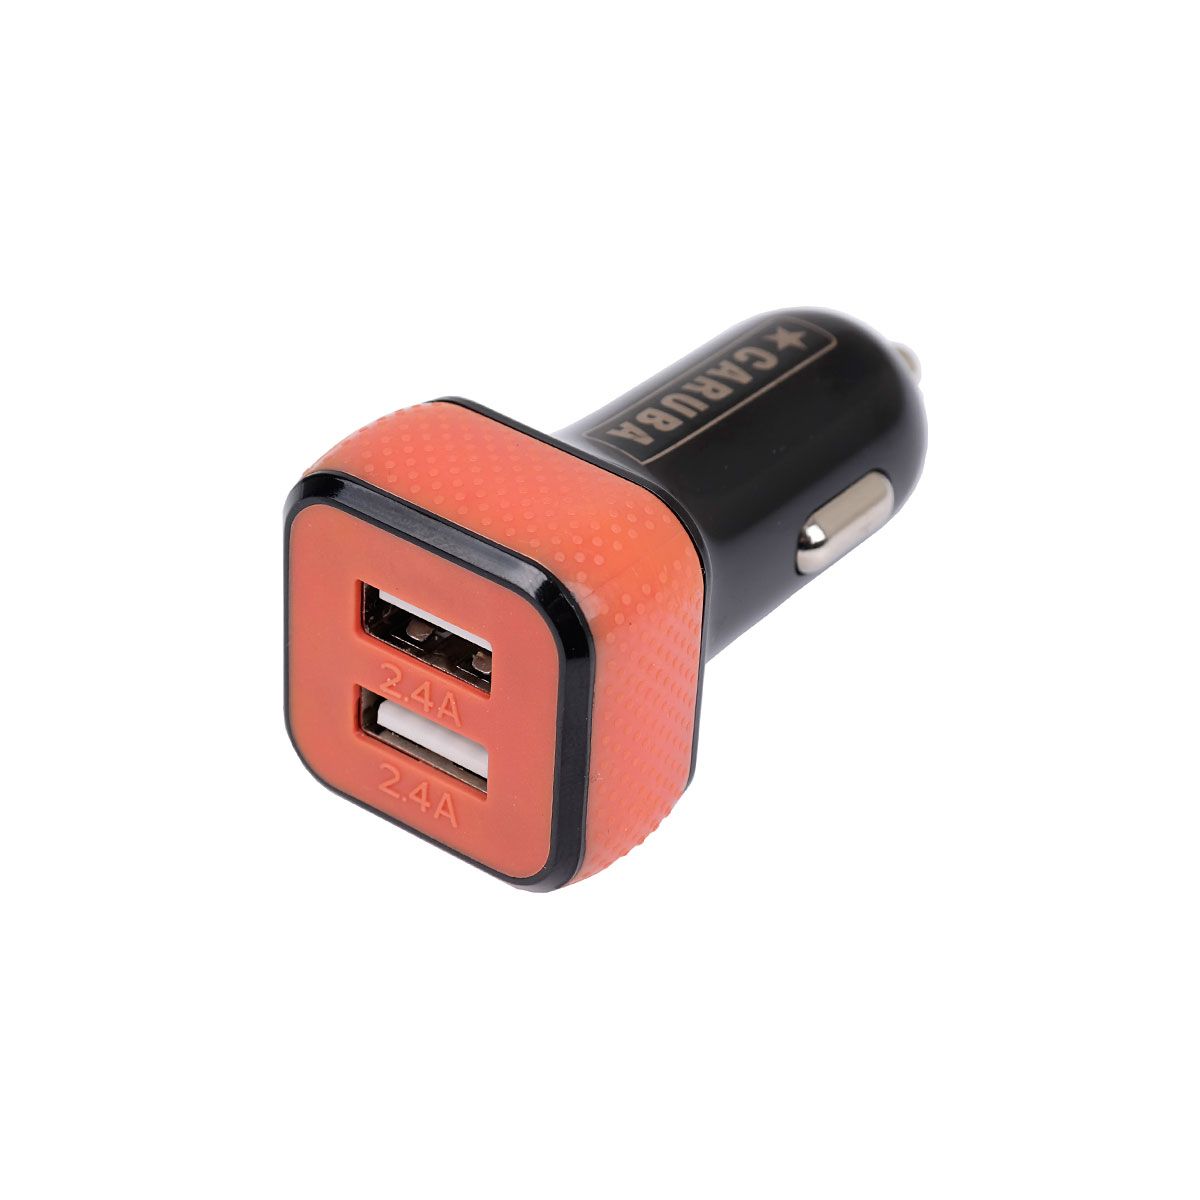 Caruba Duo USB Auto-Ladegerät 4,8 Ampere schwarz/rot - Foto Leistenschneider